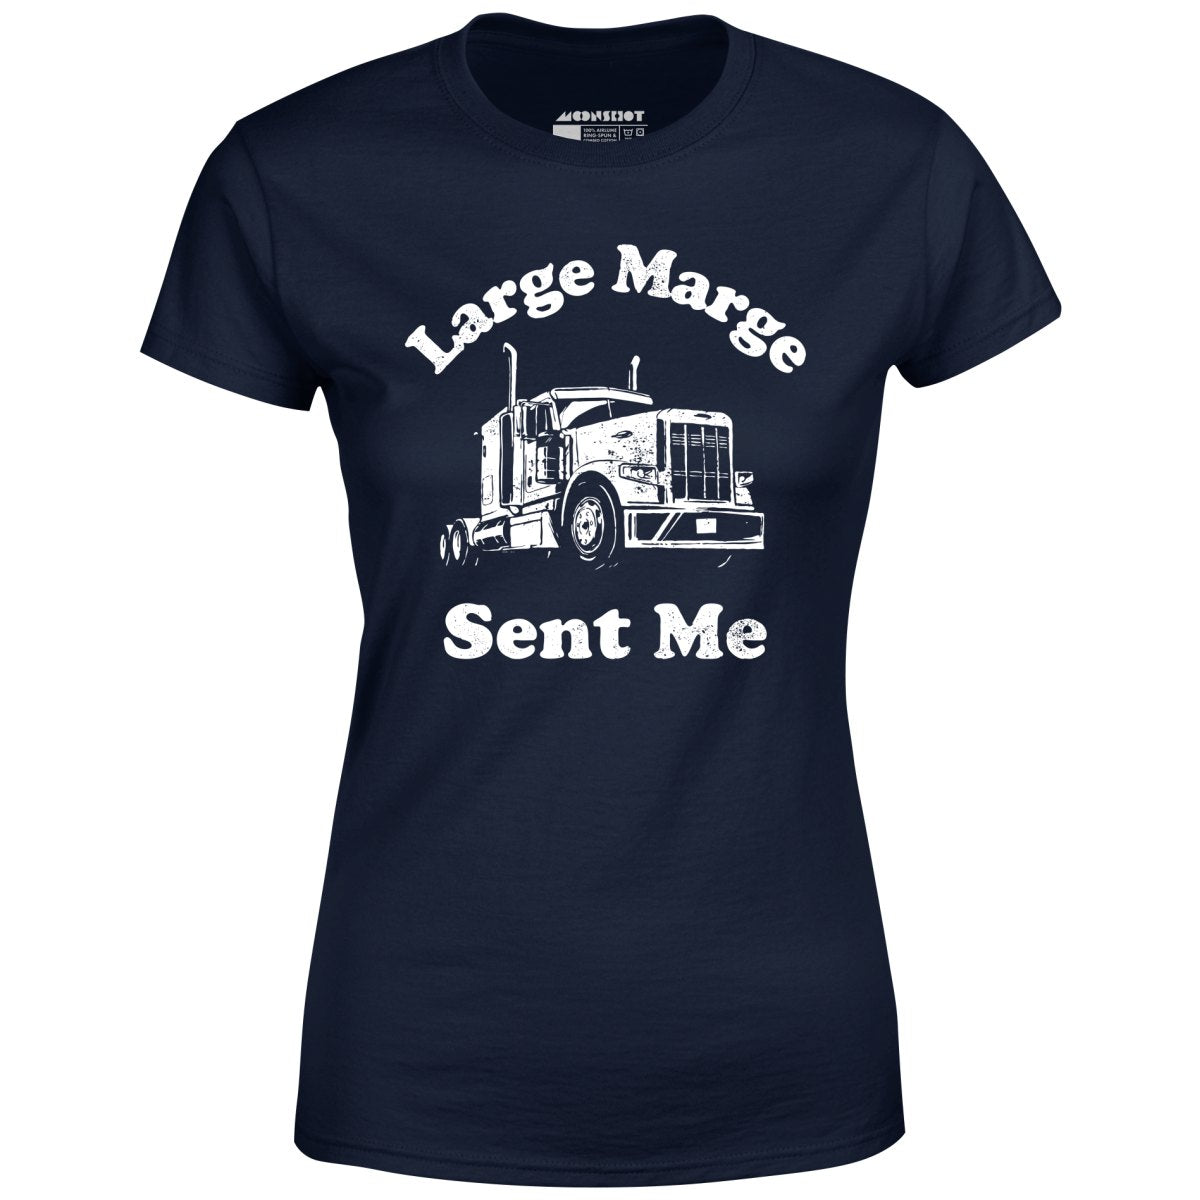 Large Marge Sent Me - Women's T-Shirt